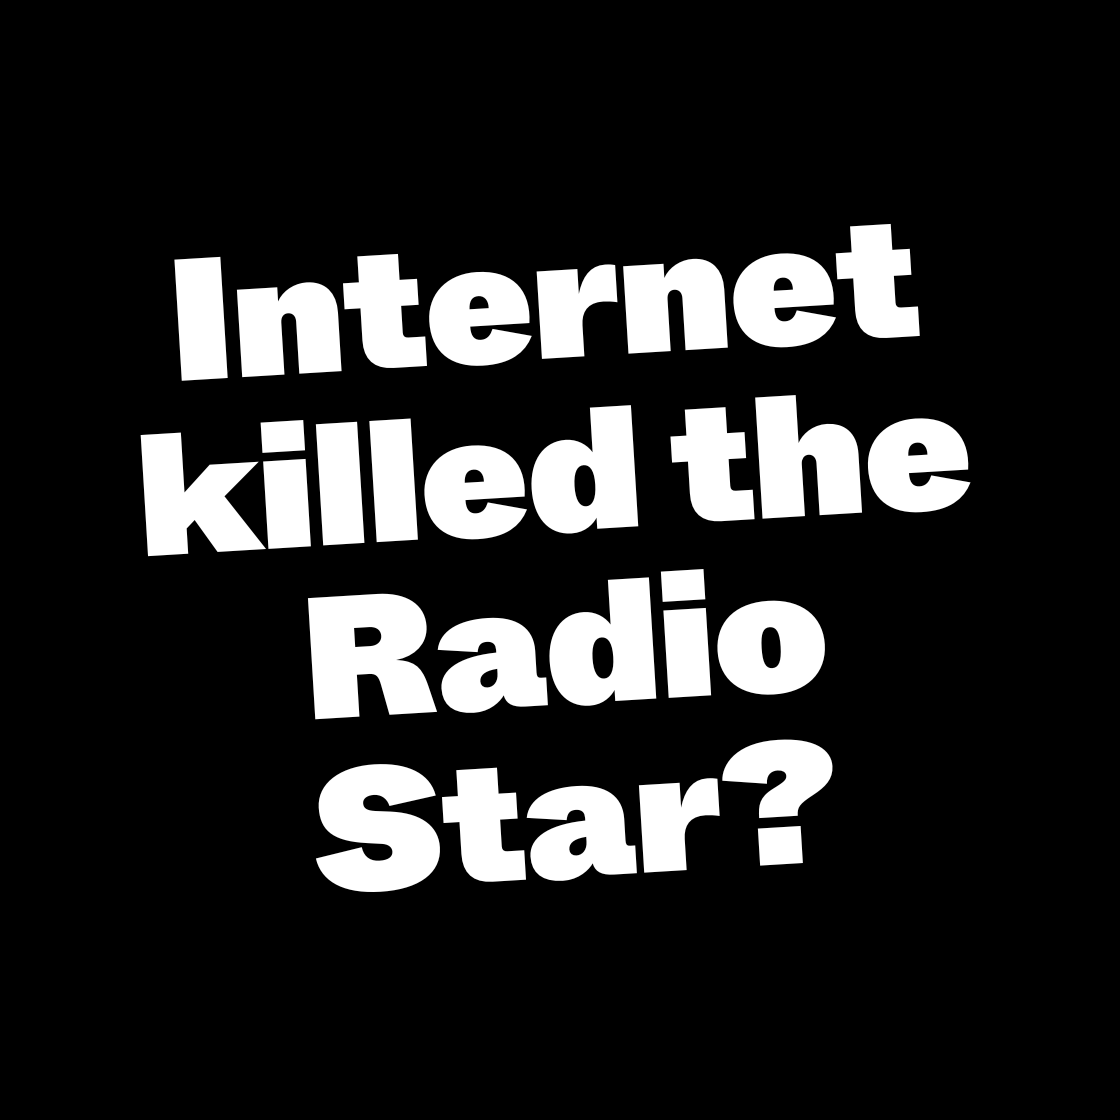 Internet killed the Radio Star?